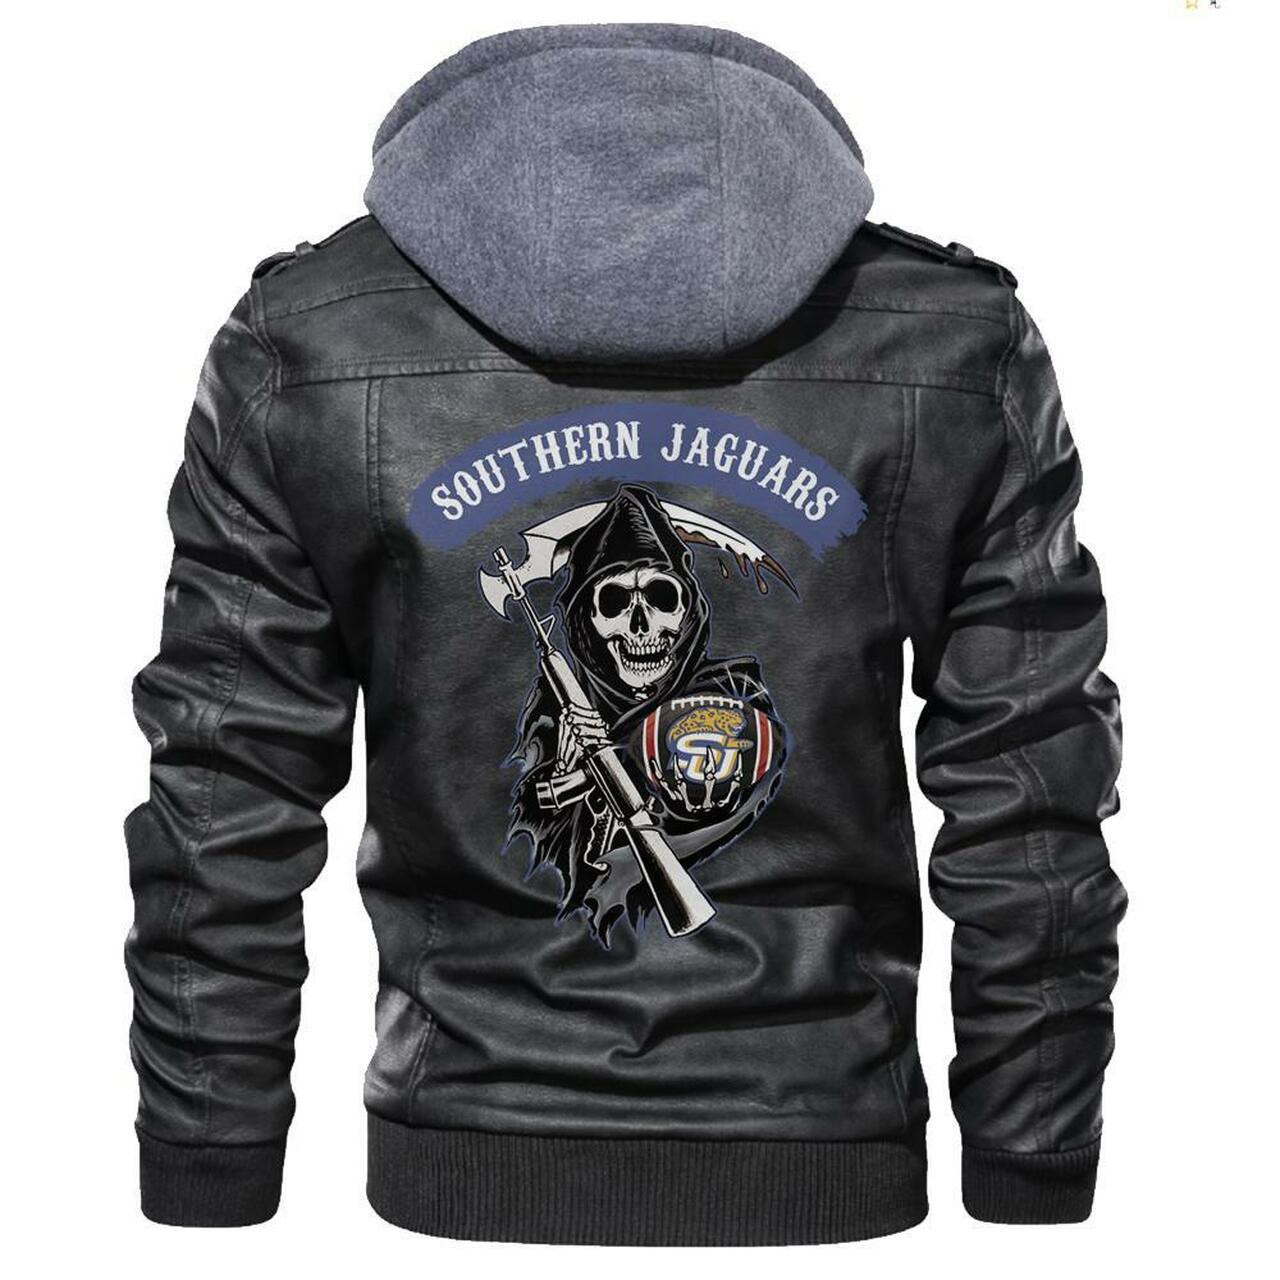 Top leather jacket Sells Best on Techcomshop 104